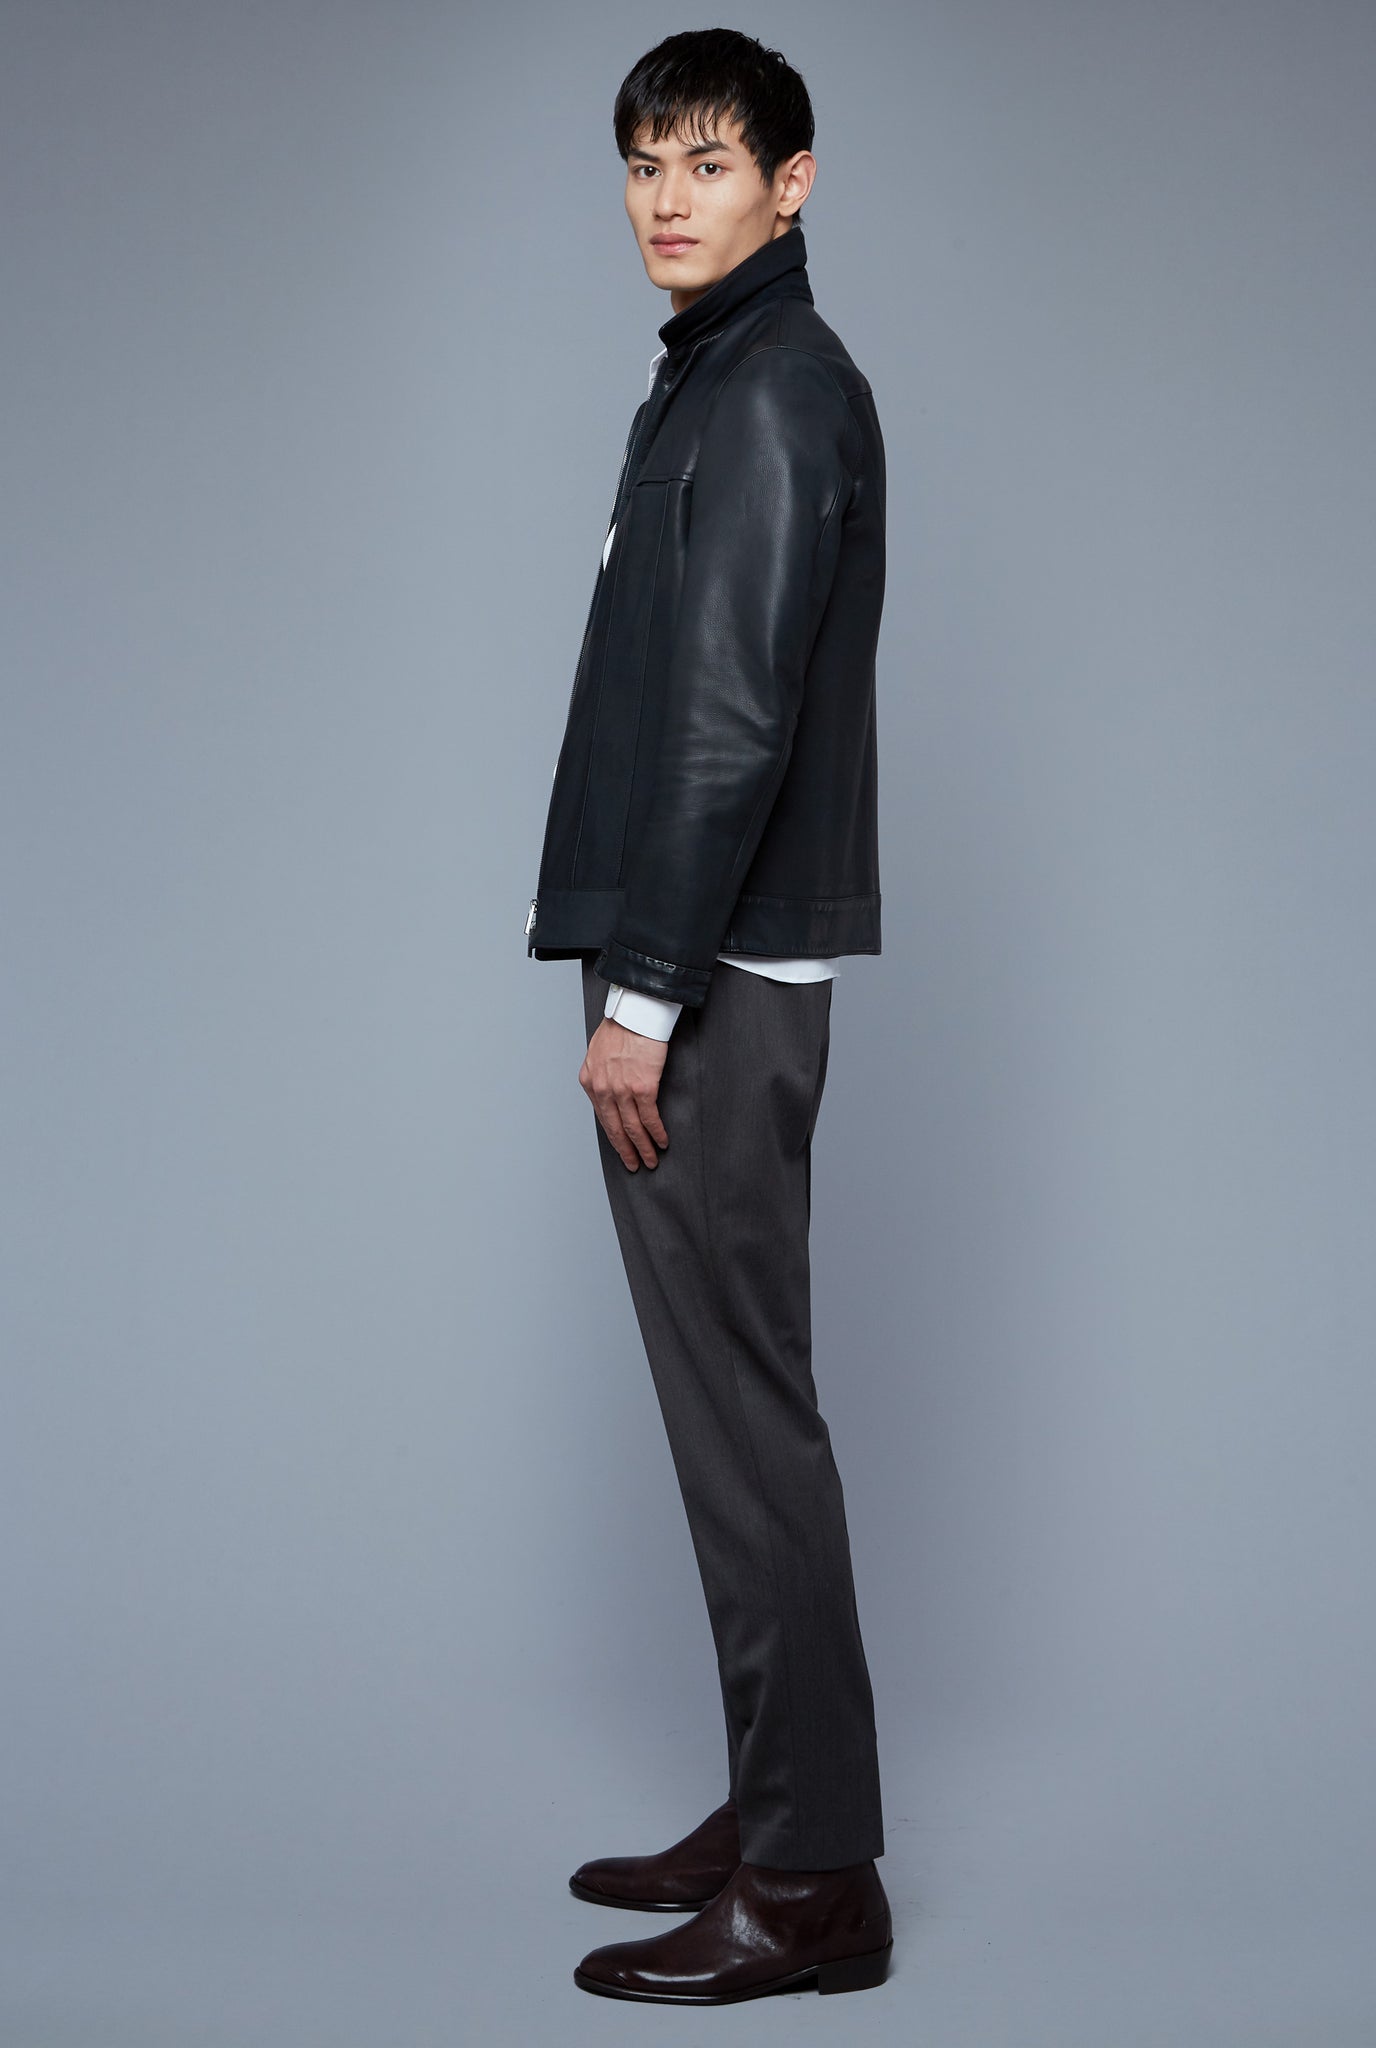 Side View: Model Qiang Li wearing Leather Supple Jacket